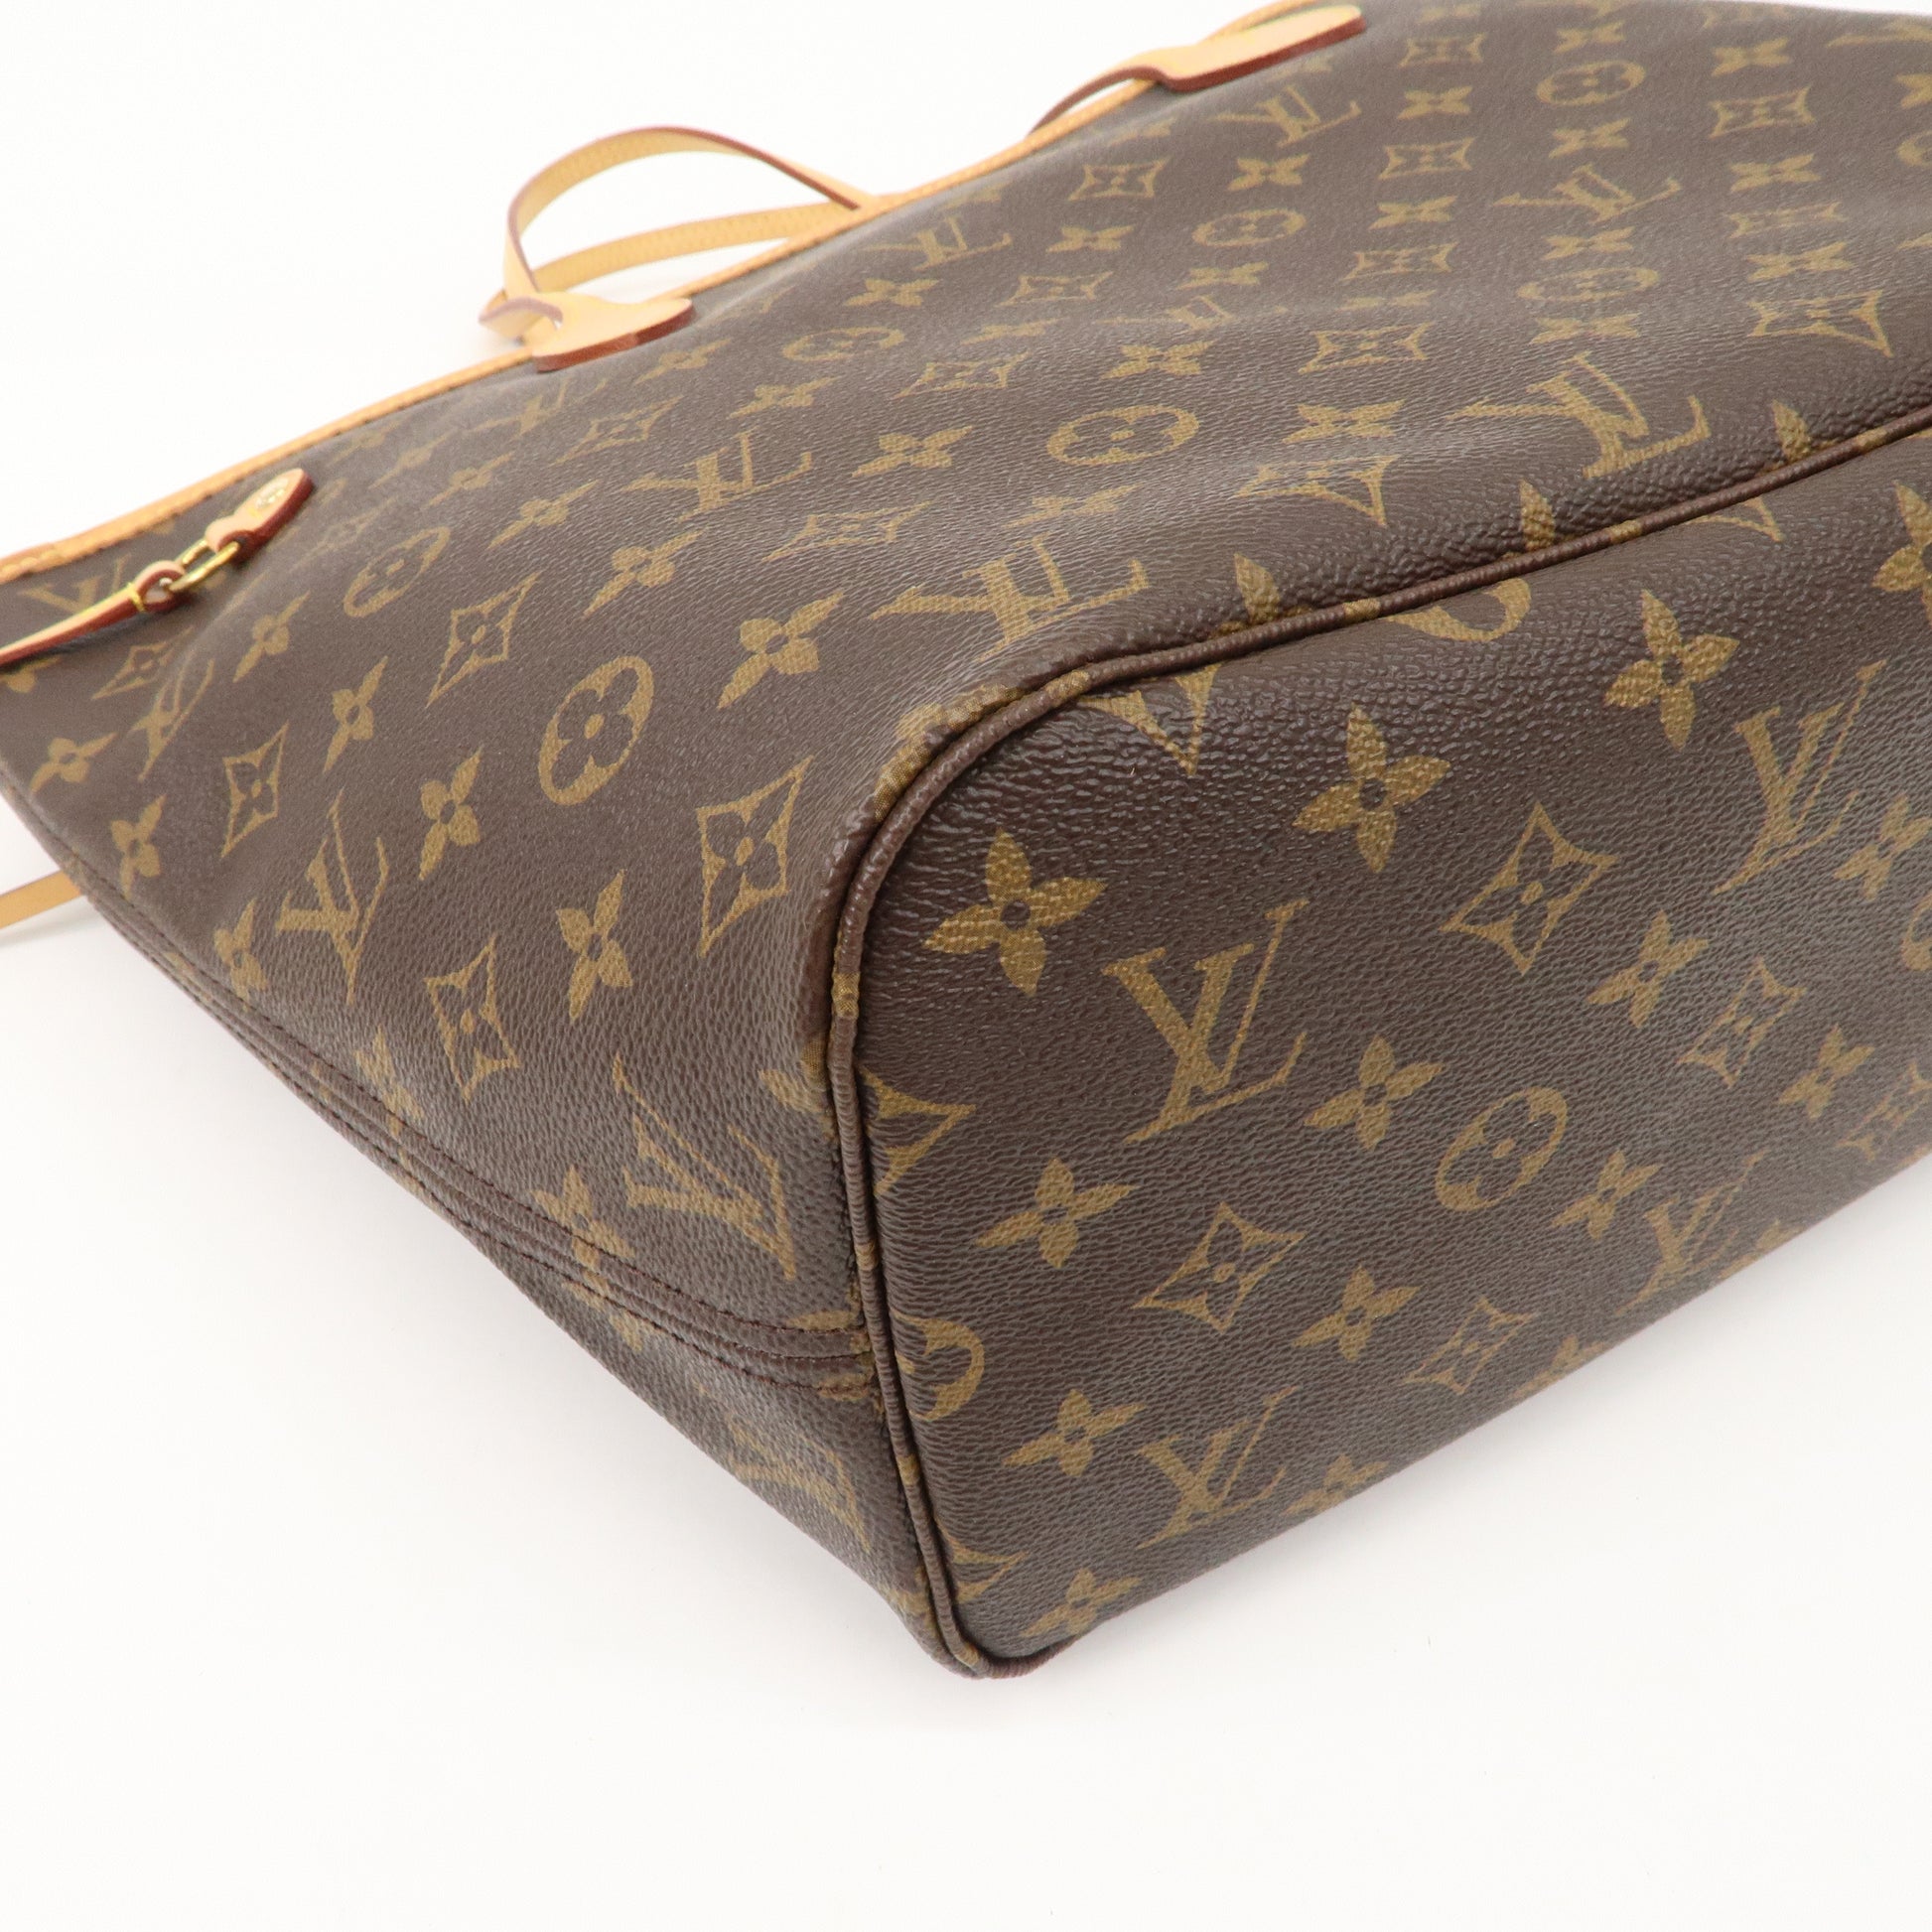 Neverfull MM Monogram Canvas - Handbags M41177 - Louis Vuitton